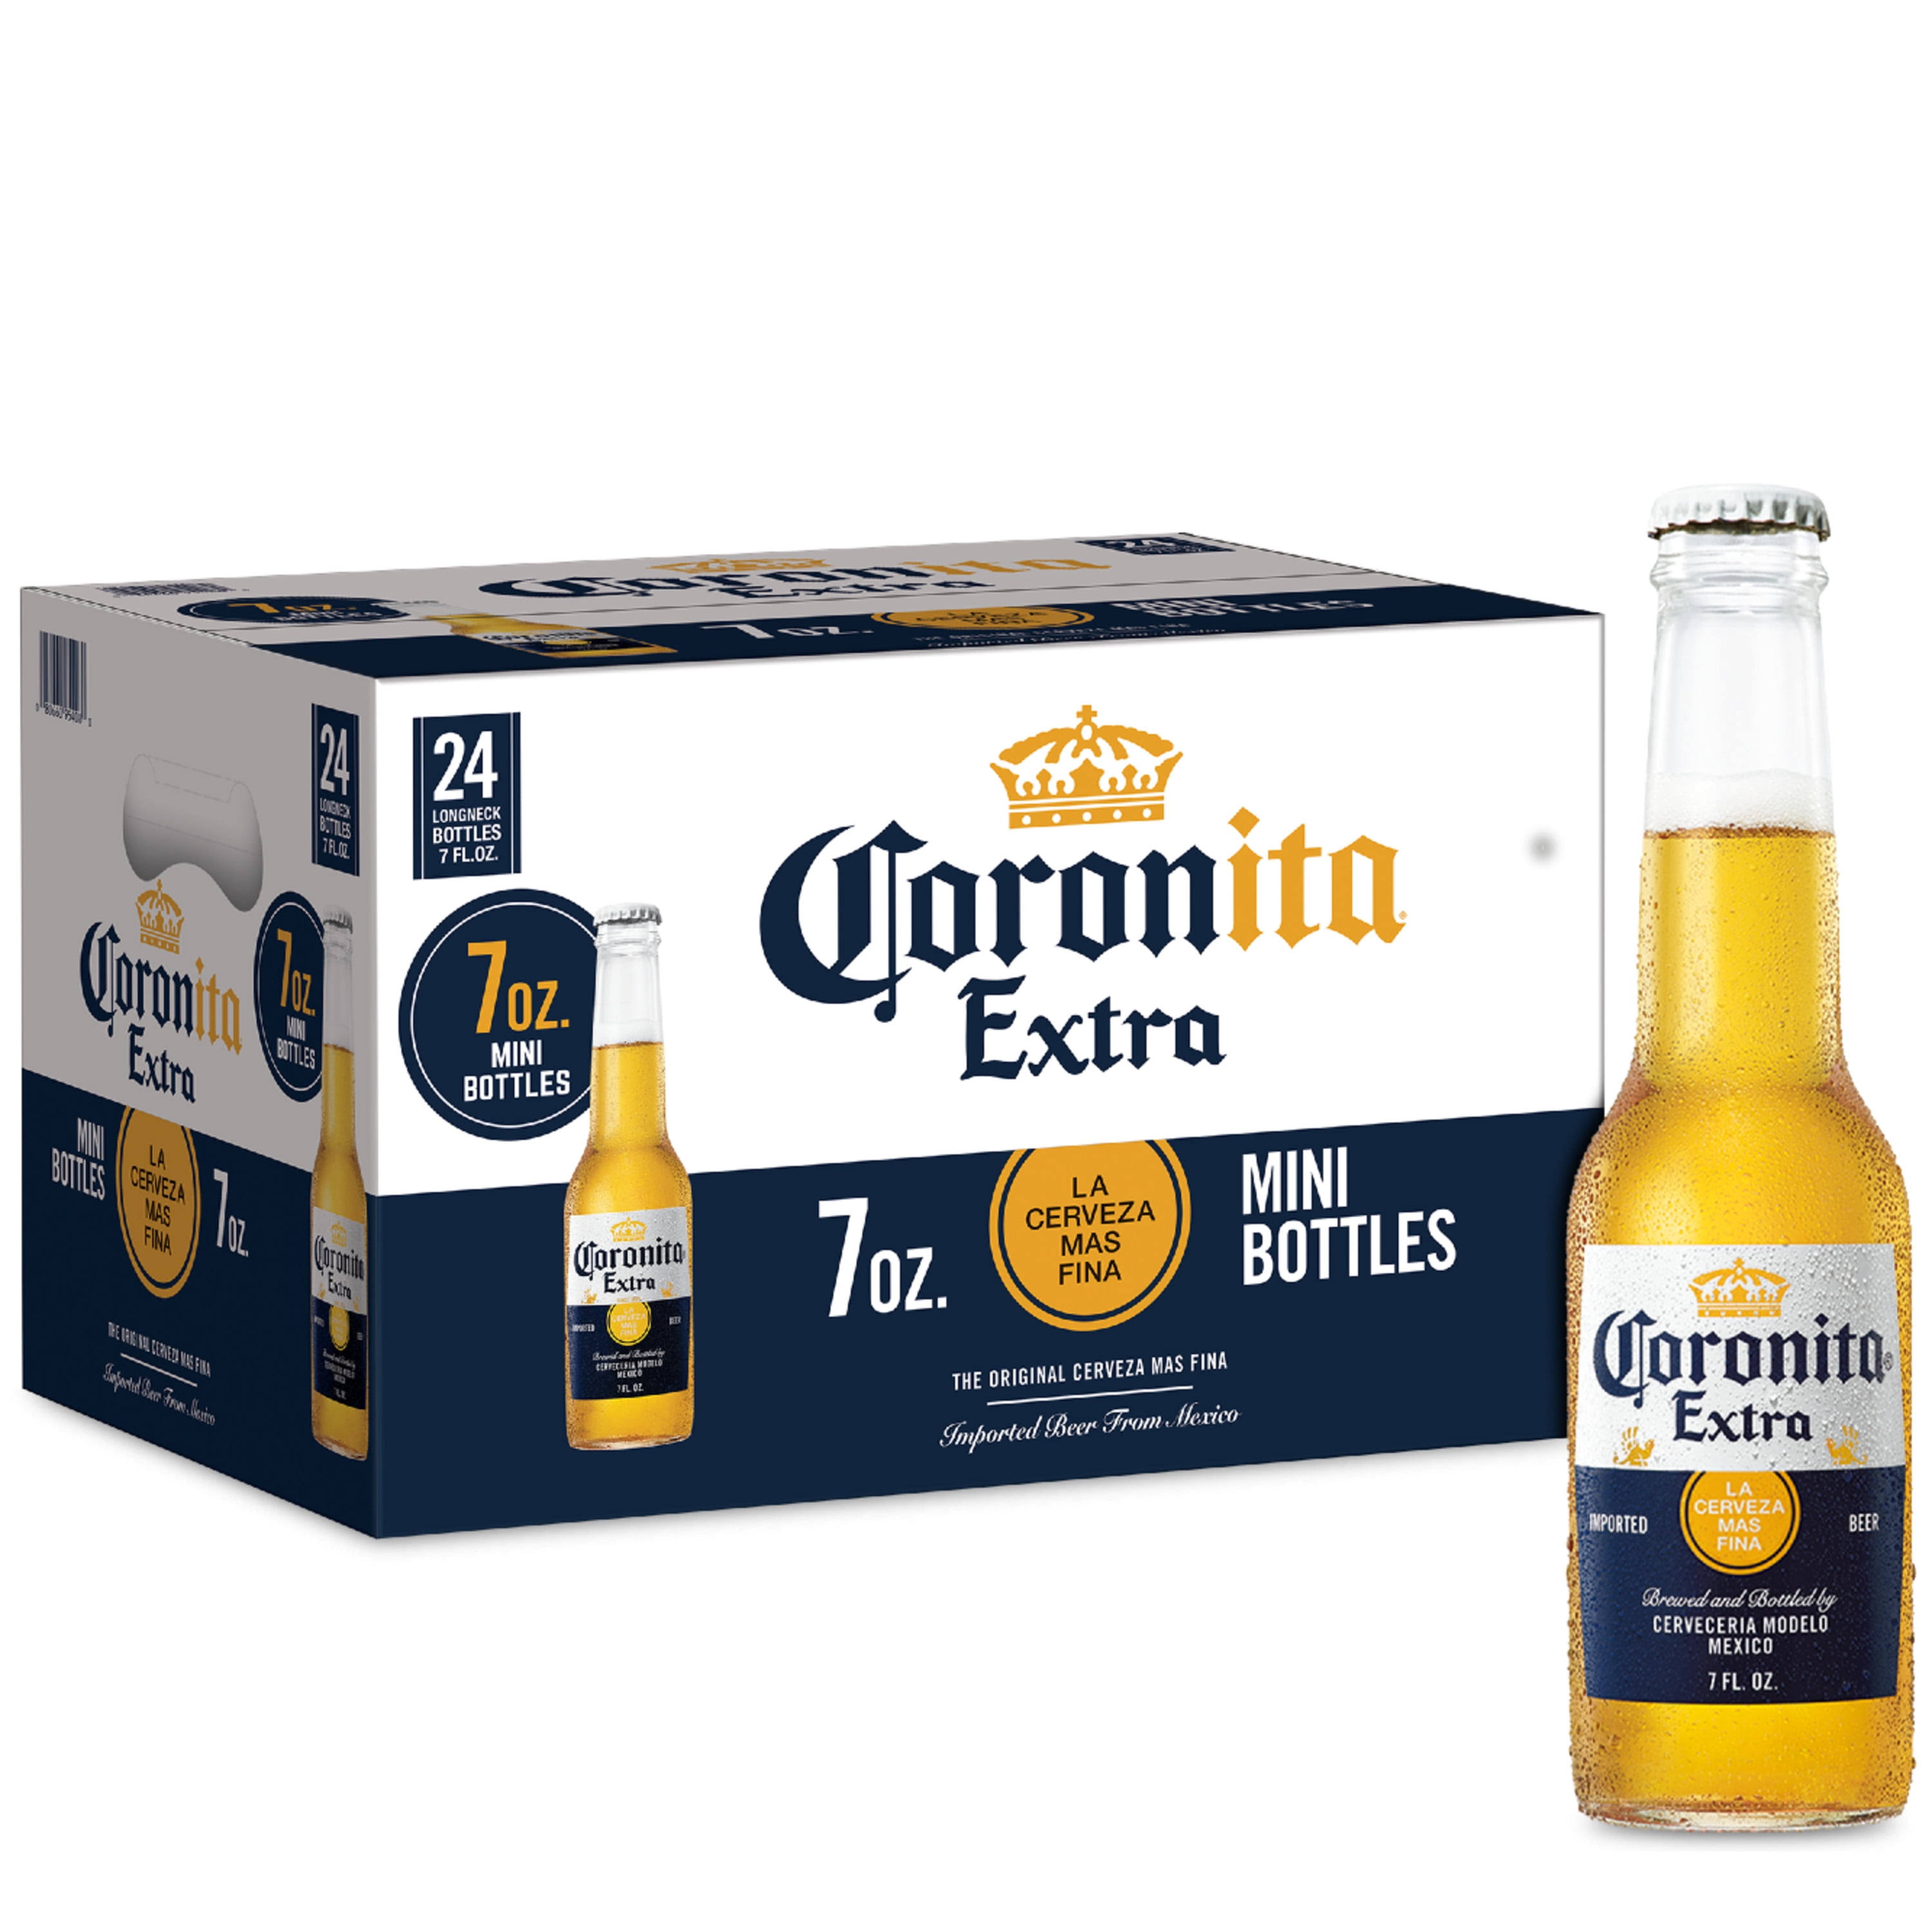 Corona Coronita - 7 oz, 24 Pack